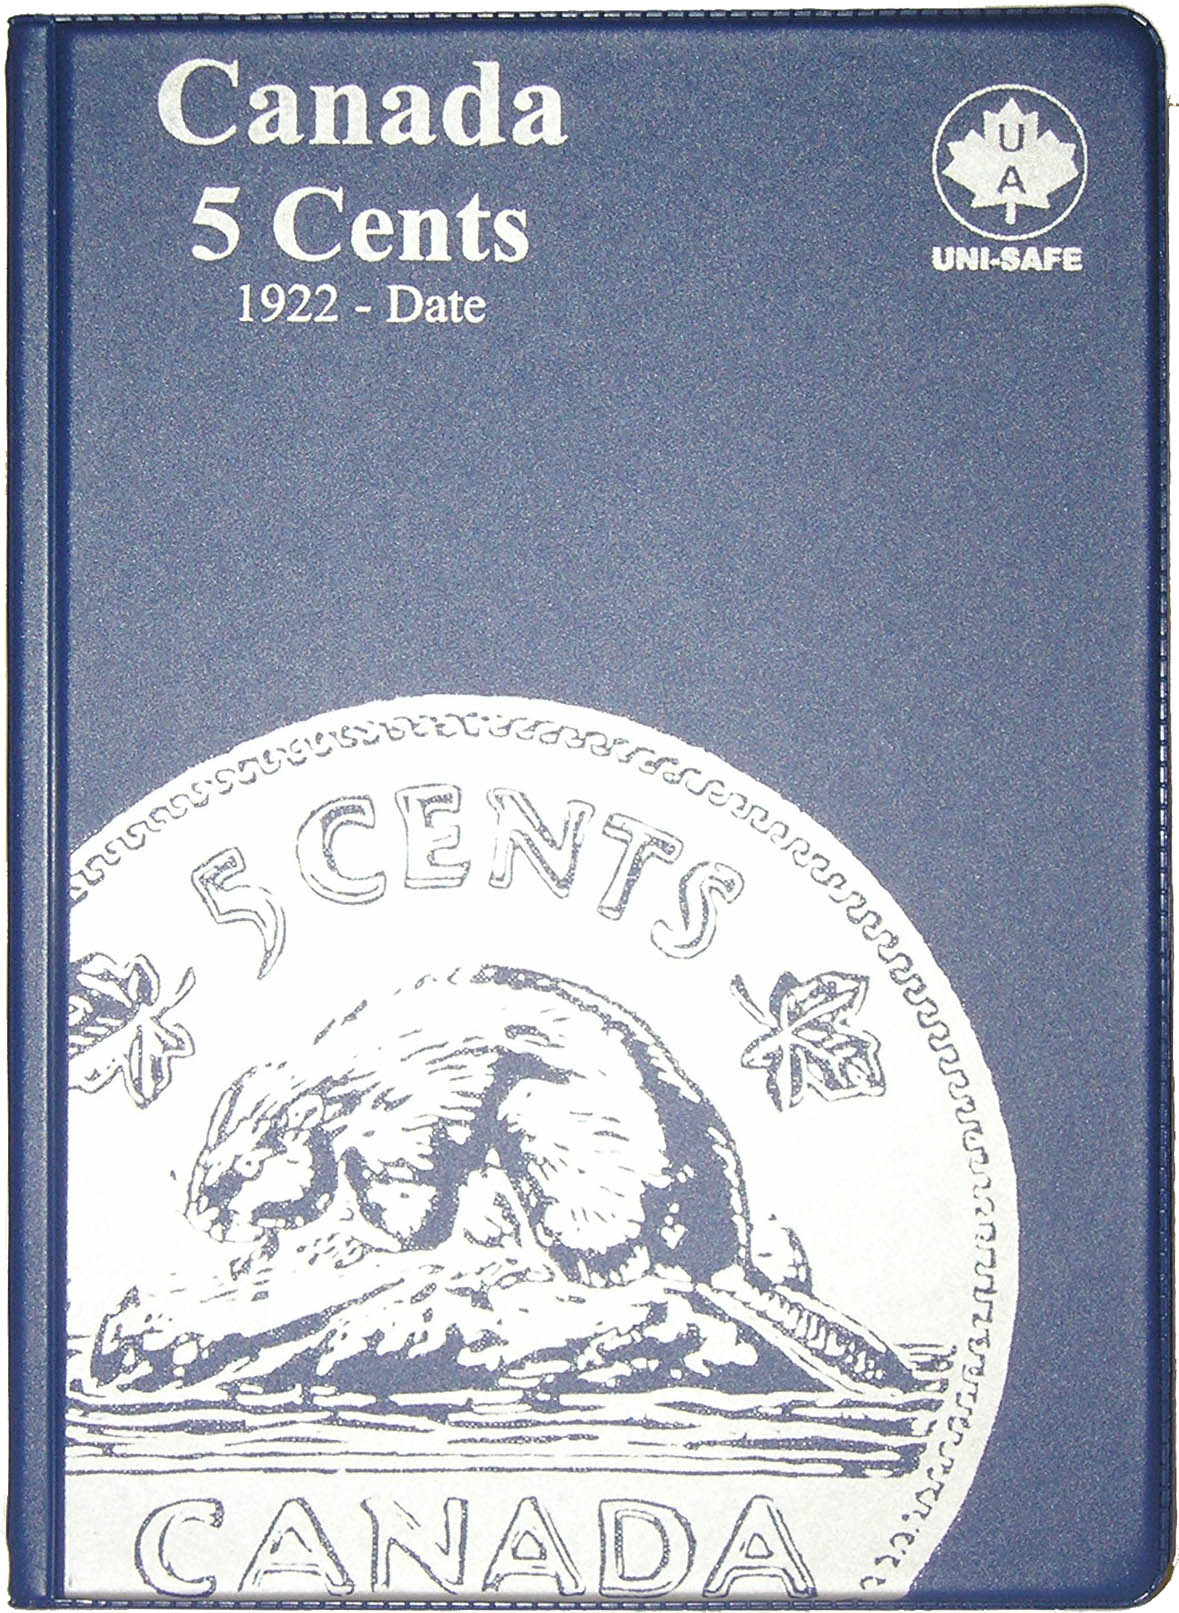 Canada 5 cents Coin Album 1922-Date Uni-Safe 